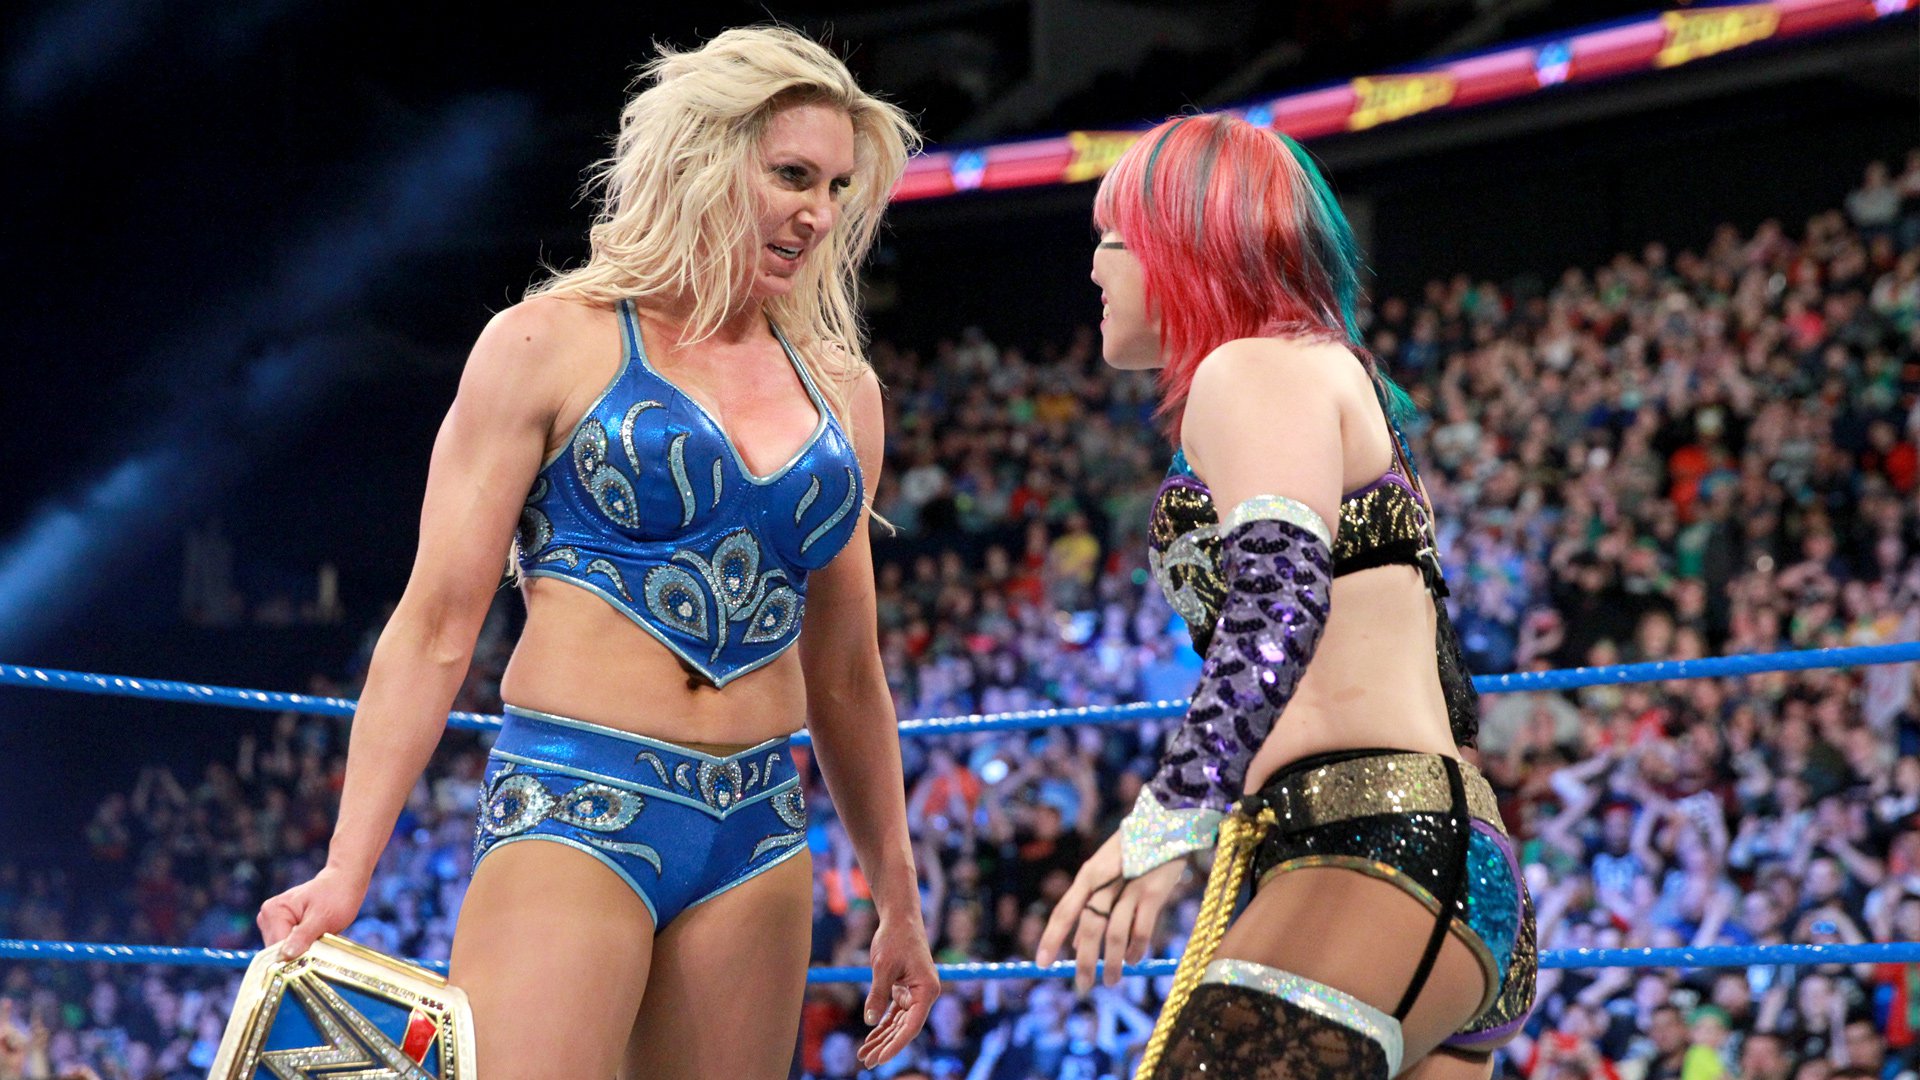 Charlotte vs Asuka WrestleMania